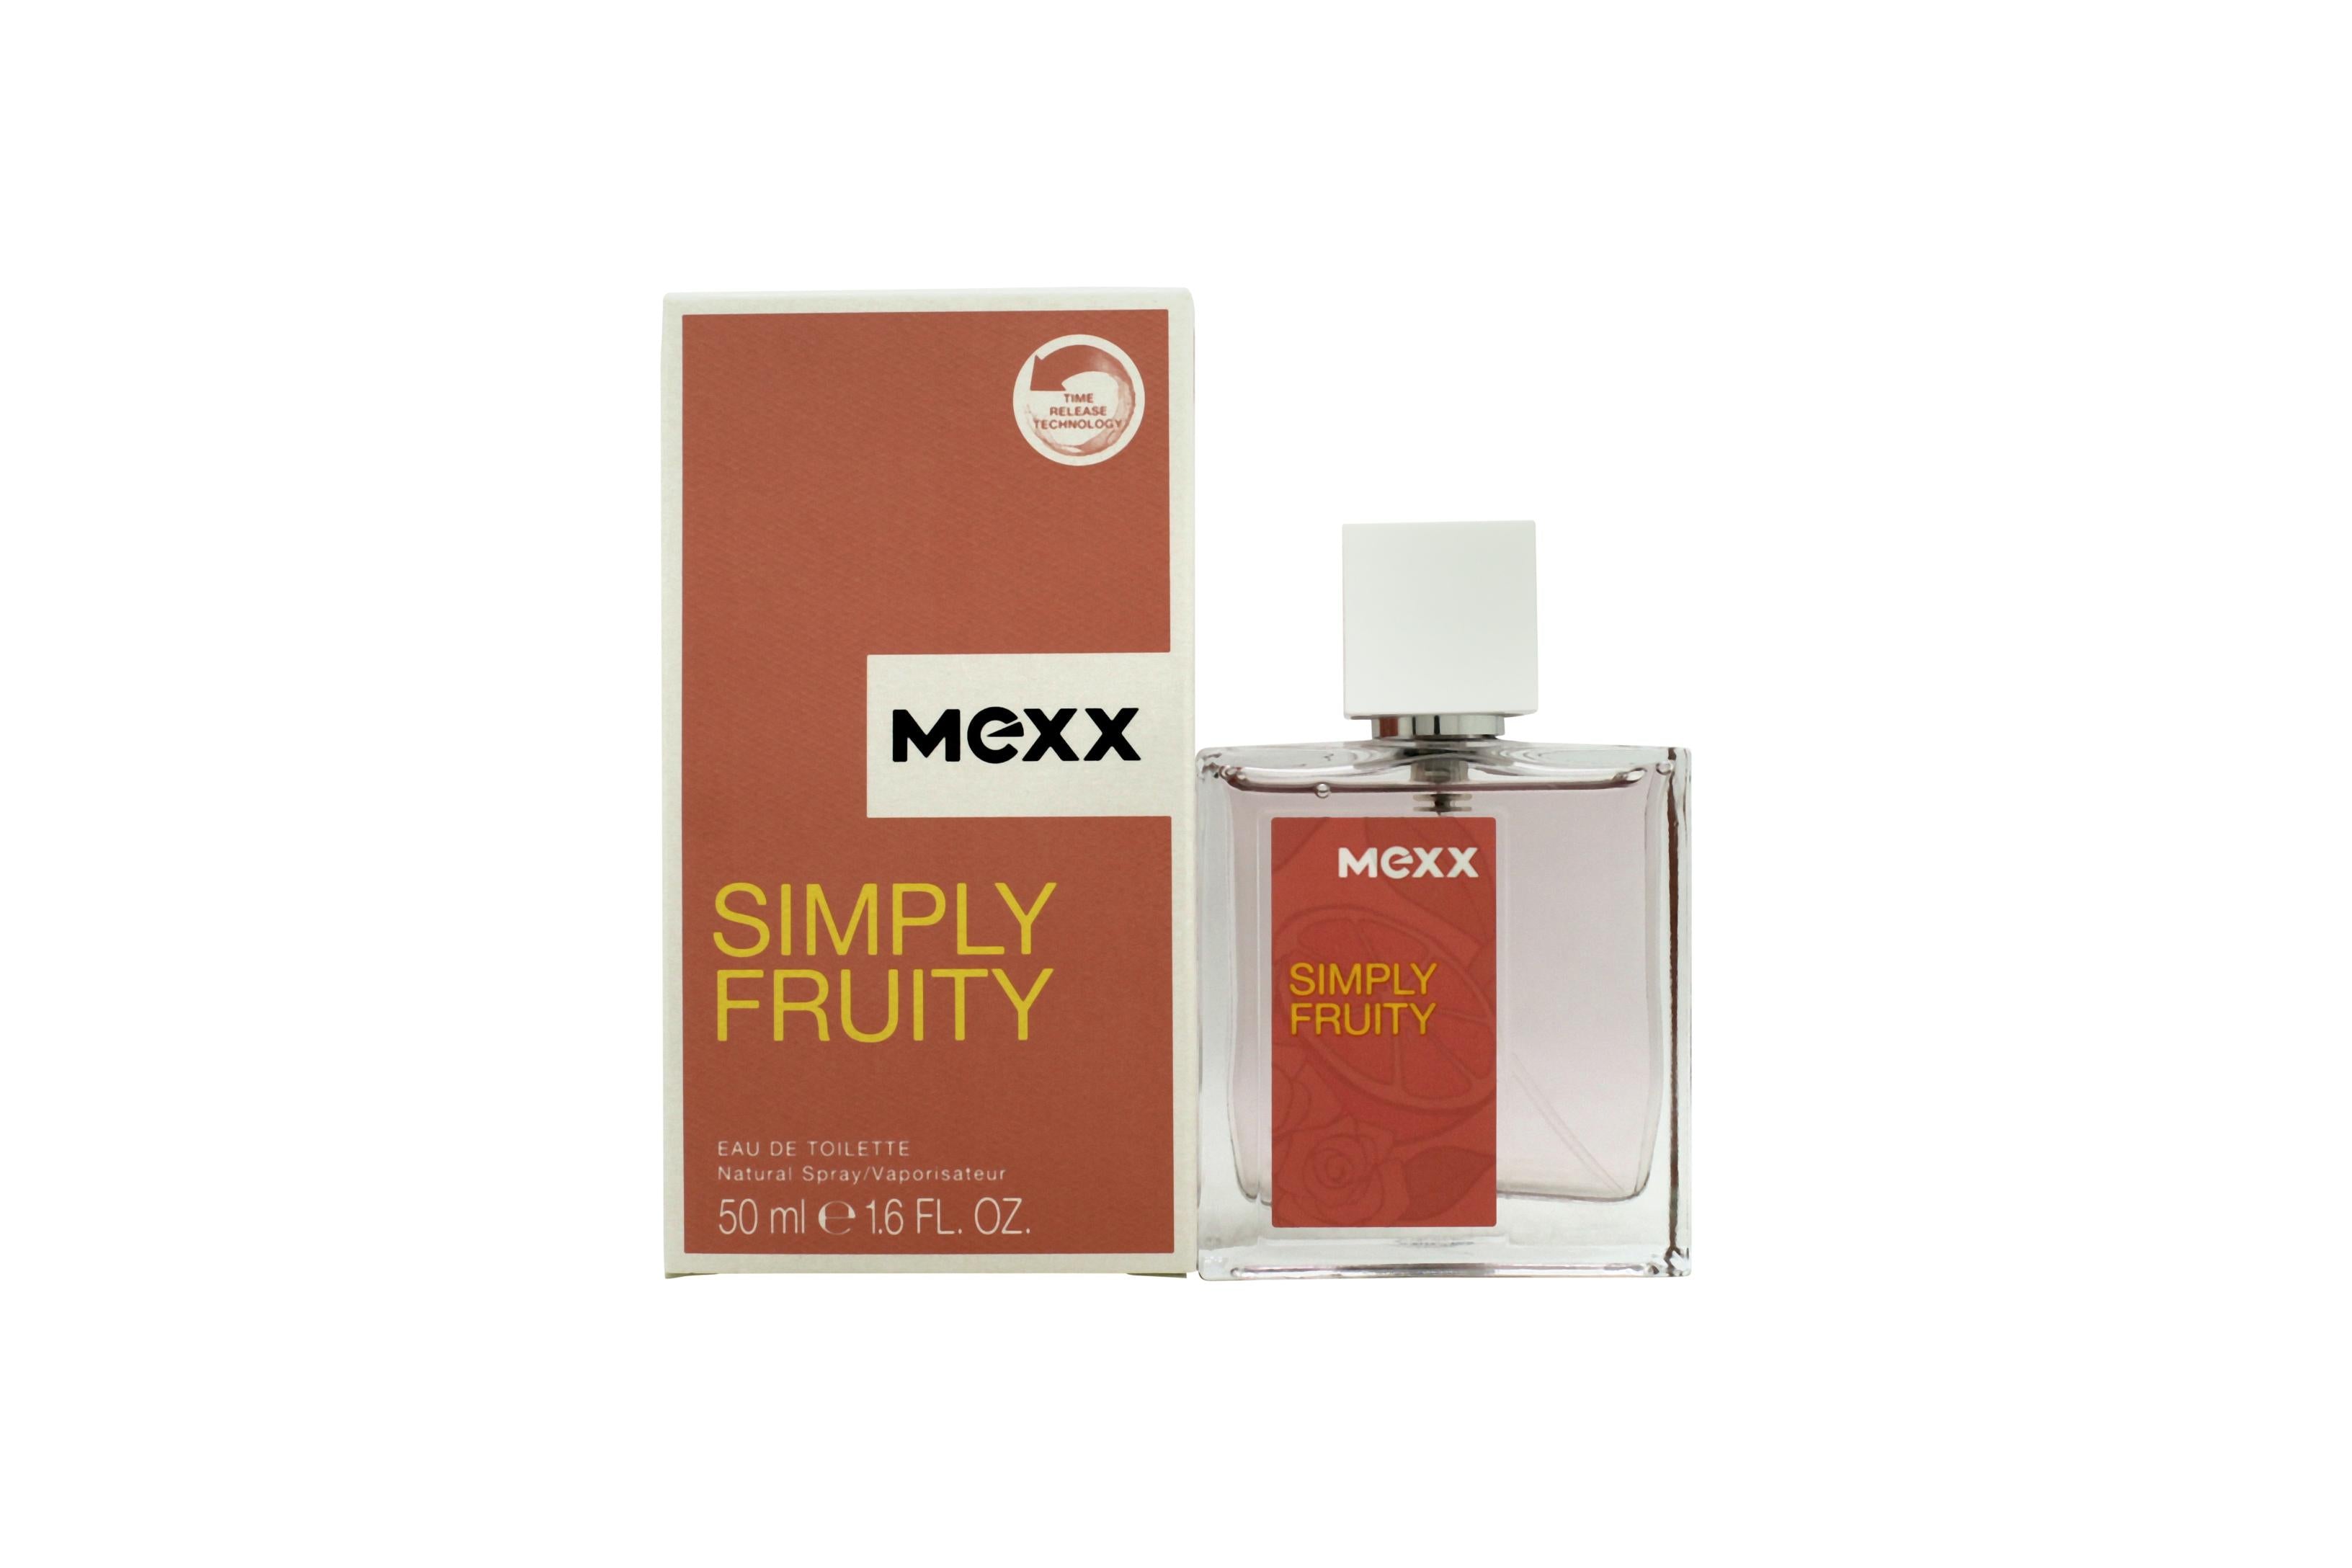 View Mexx Simply Fruity Eau de Toilette 50ml Spray information